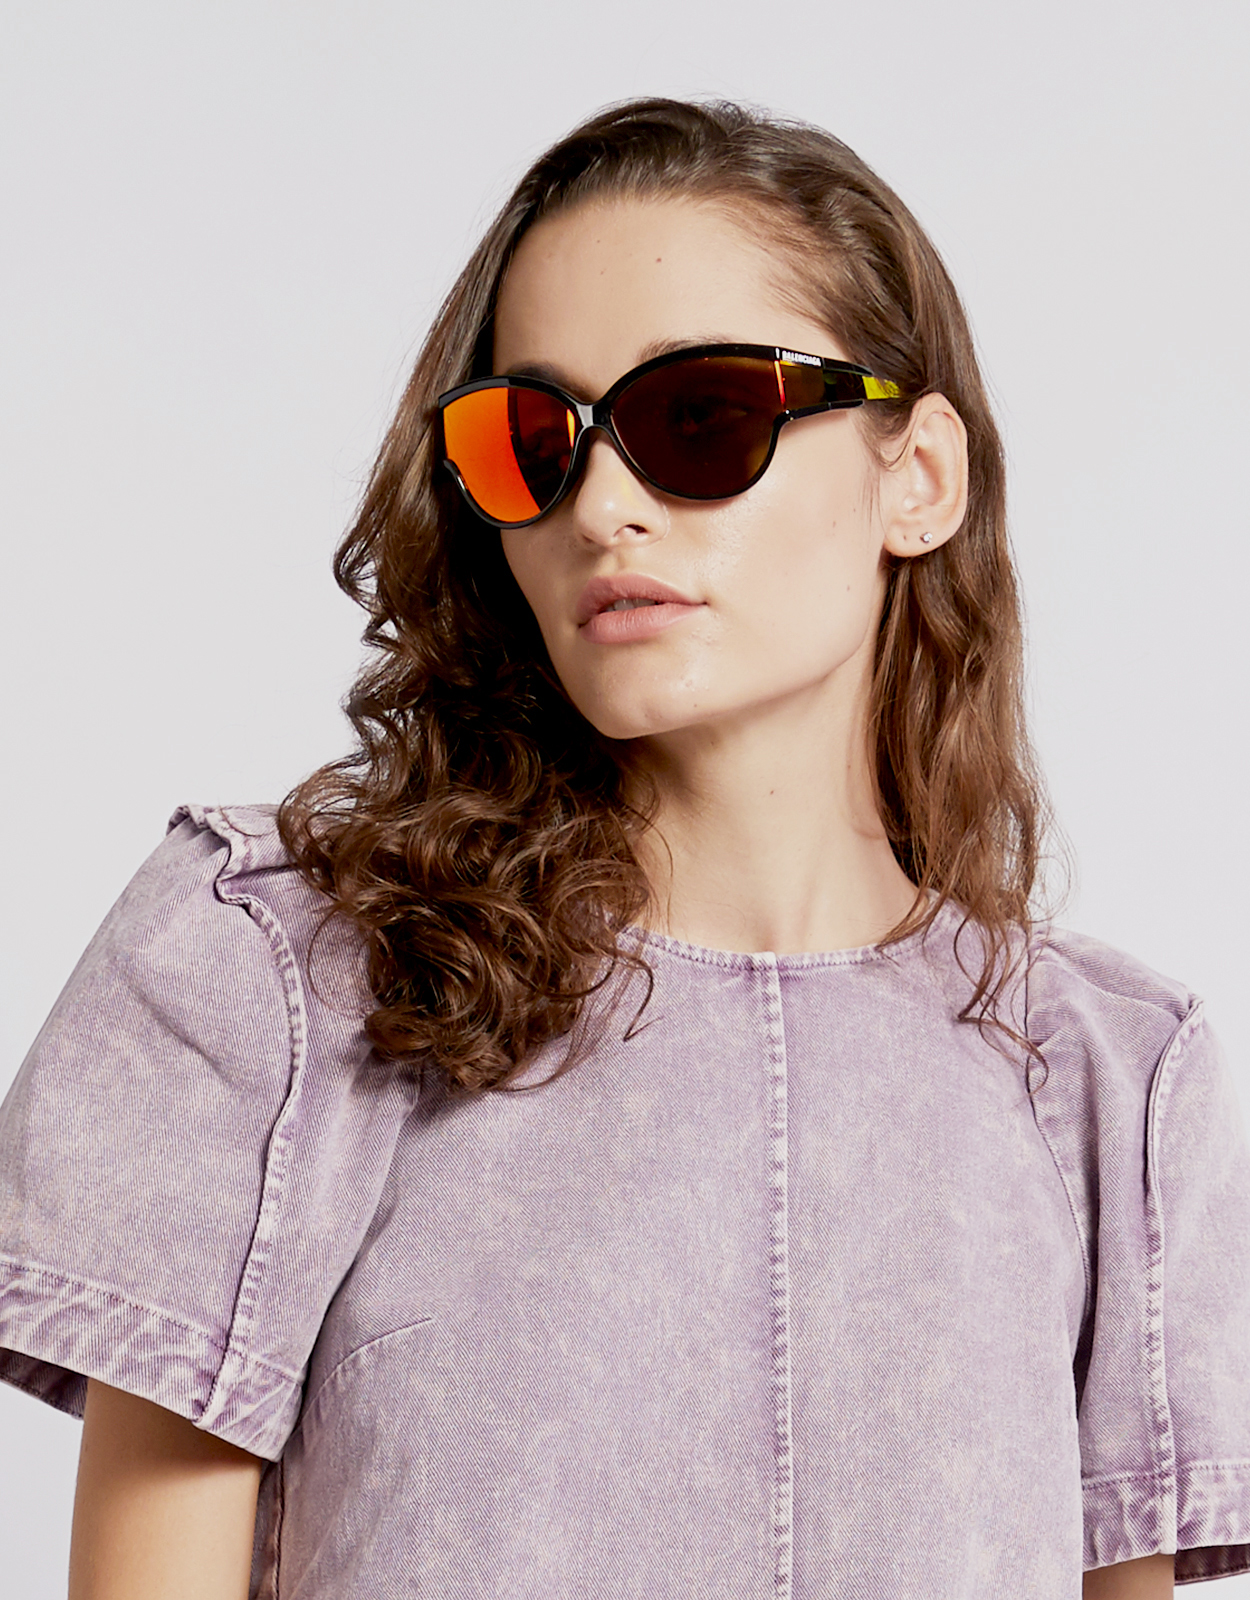 Balenciaga Unlimited Round Mirrored Sunglasses (Sunglasses,Round Frame)  IFCHIC.COM